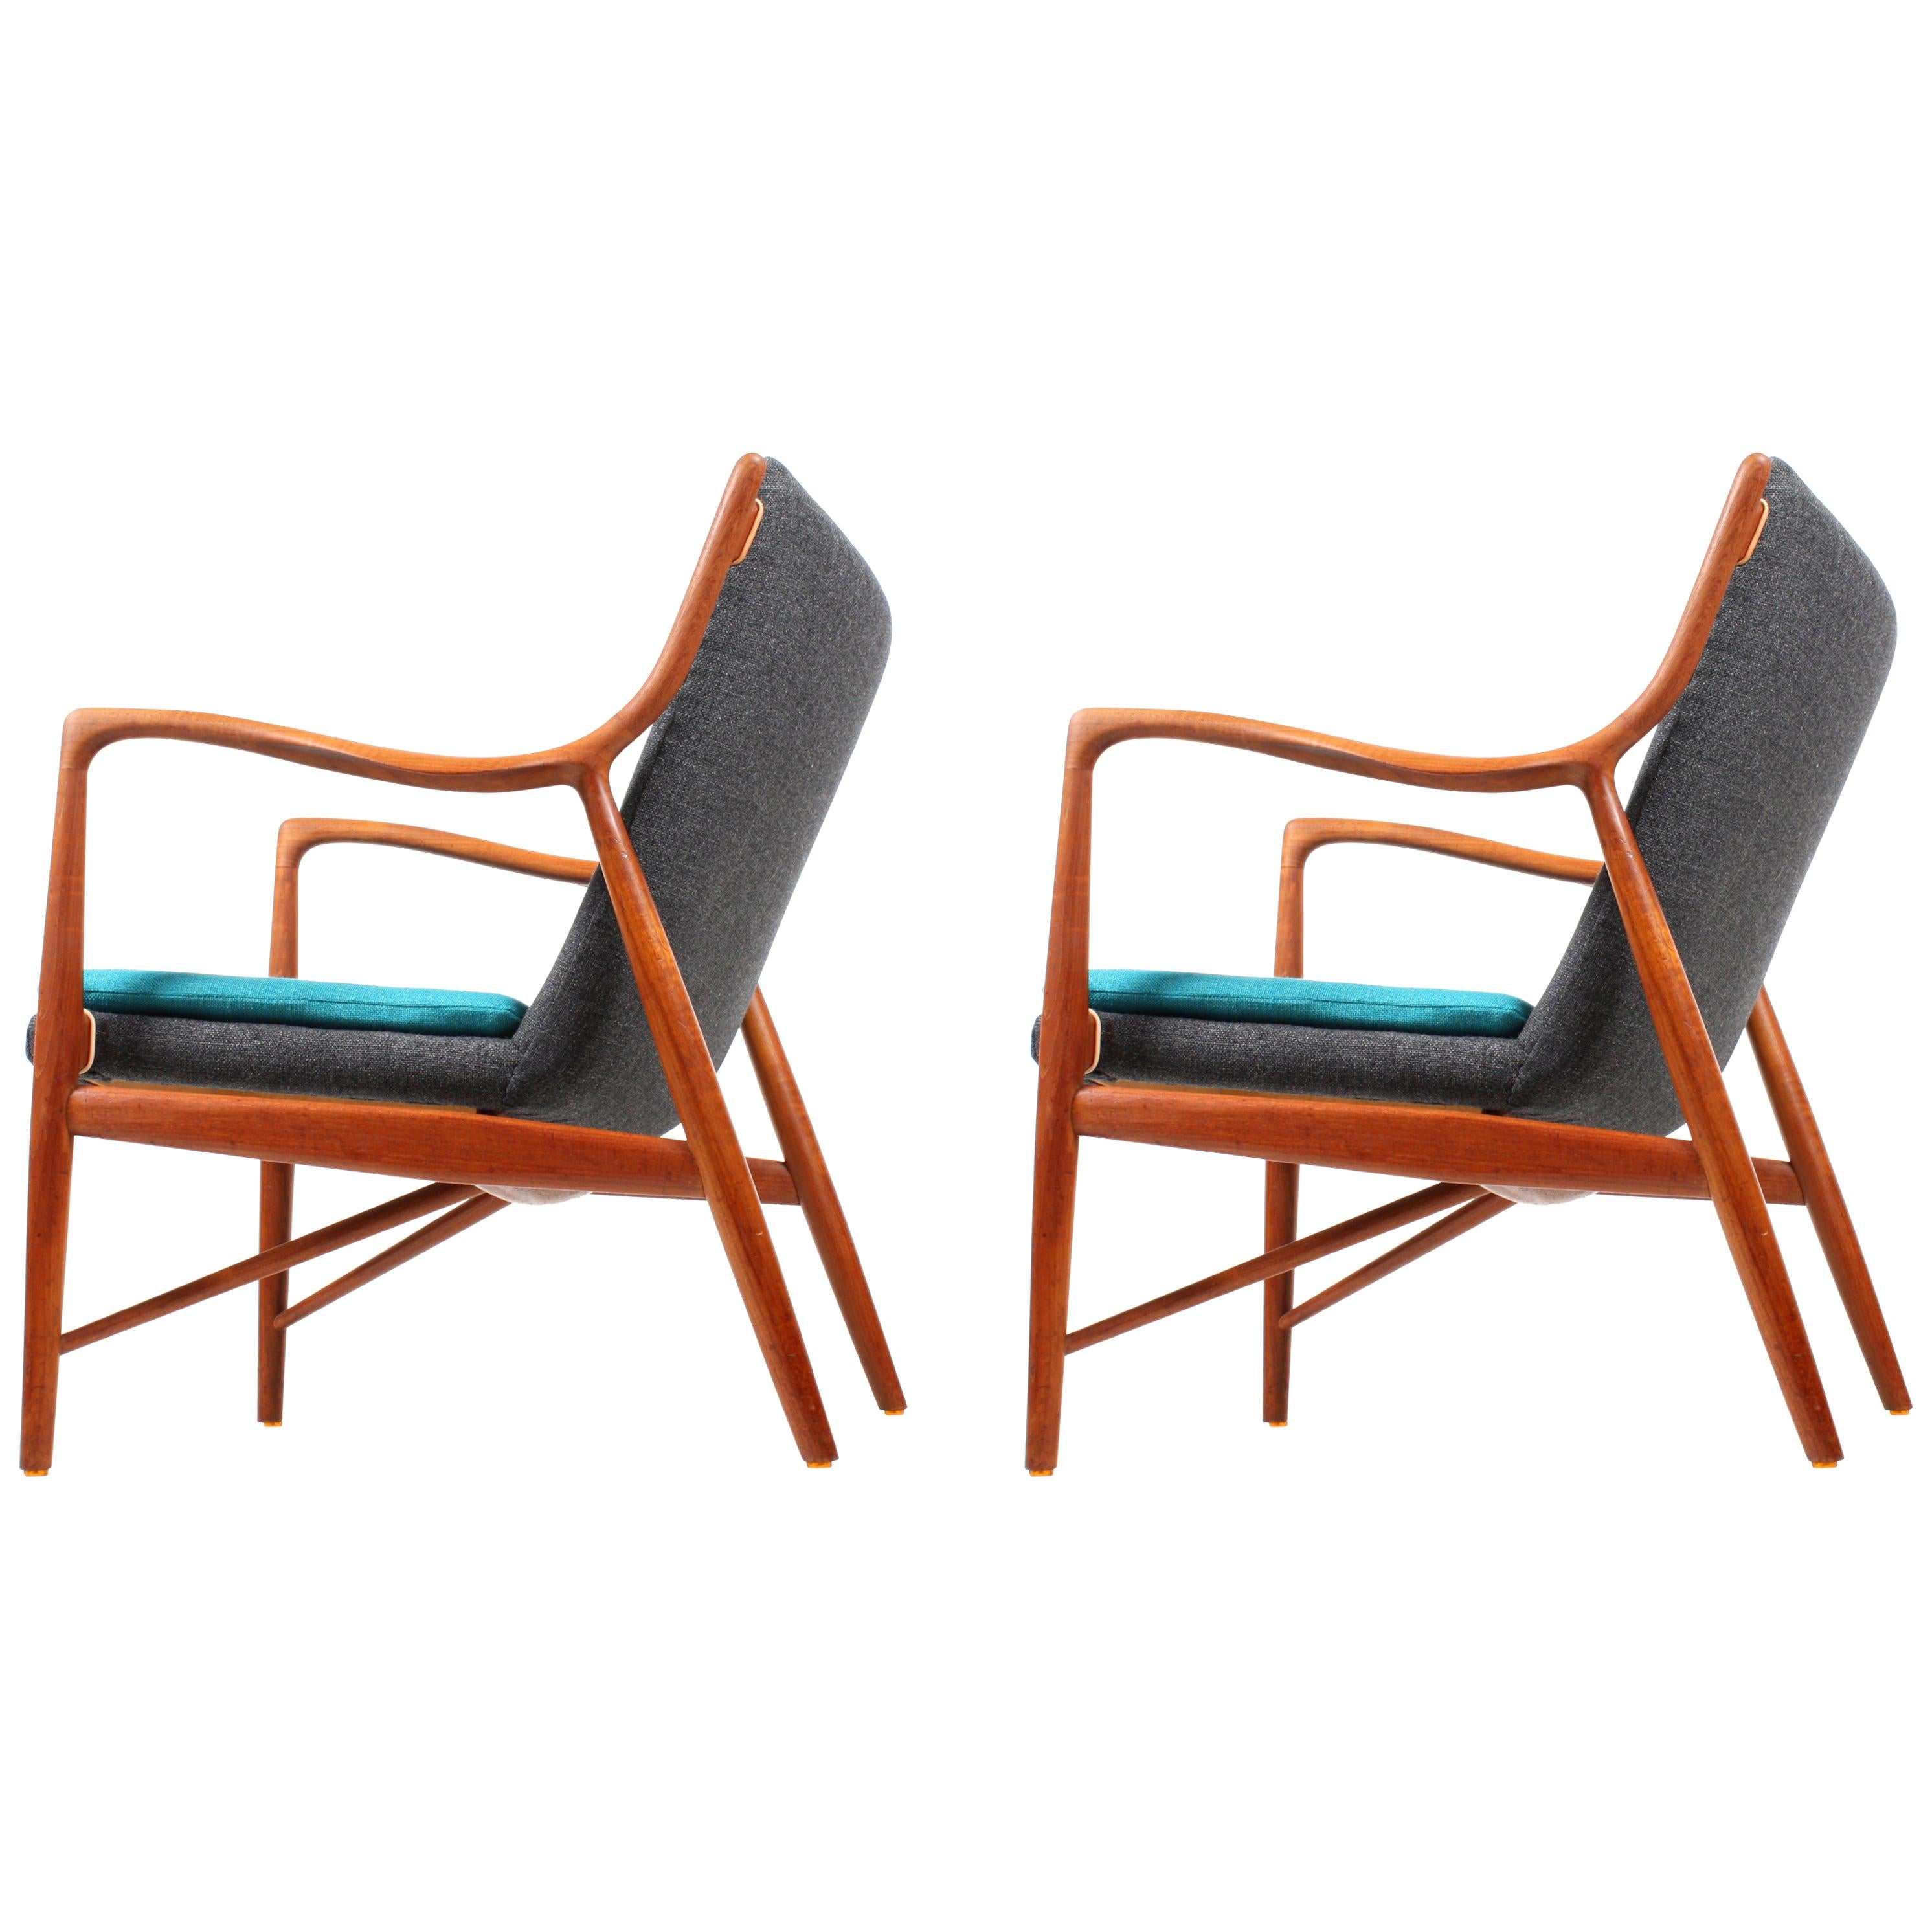 Pair of Midcentury NV45 Lounge chairs in Teak by Finn Juhl for Niels Vodder